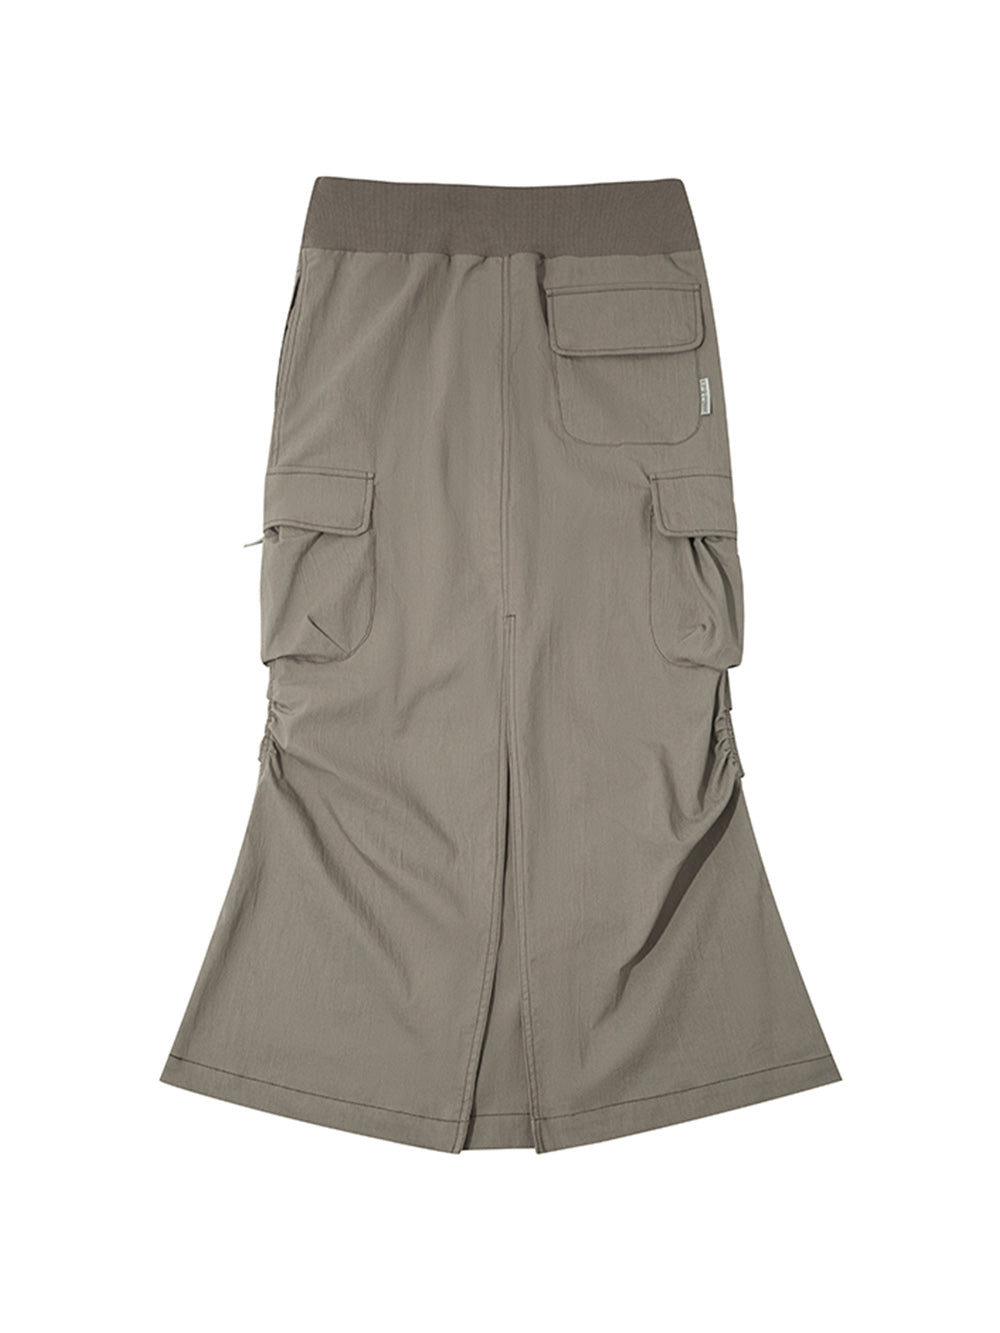 MUKTANK  Fish Tail Shaped Maxi Skirt